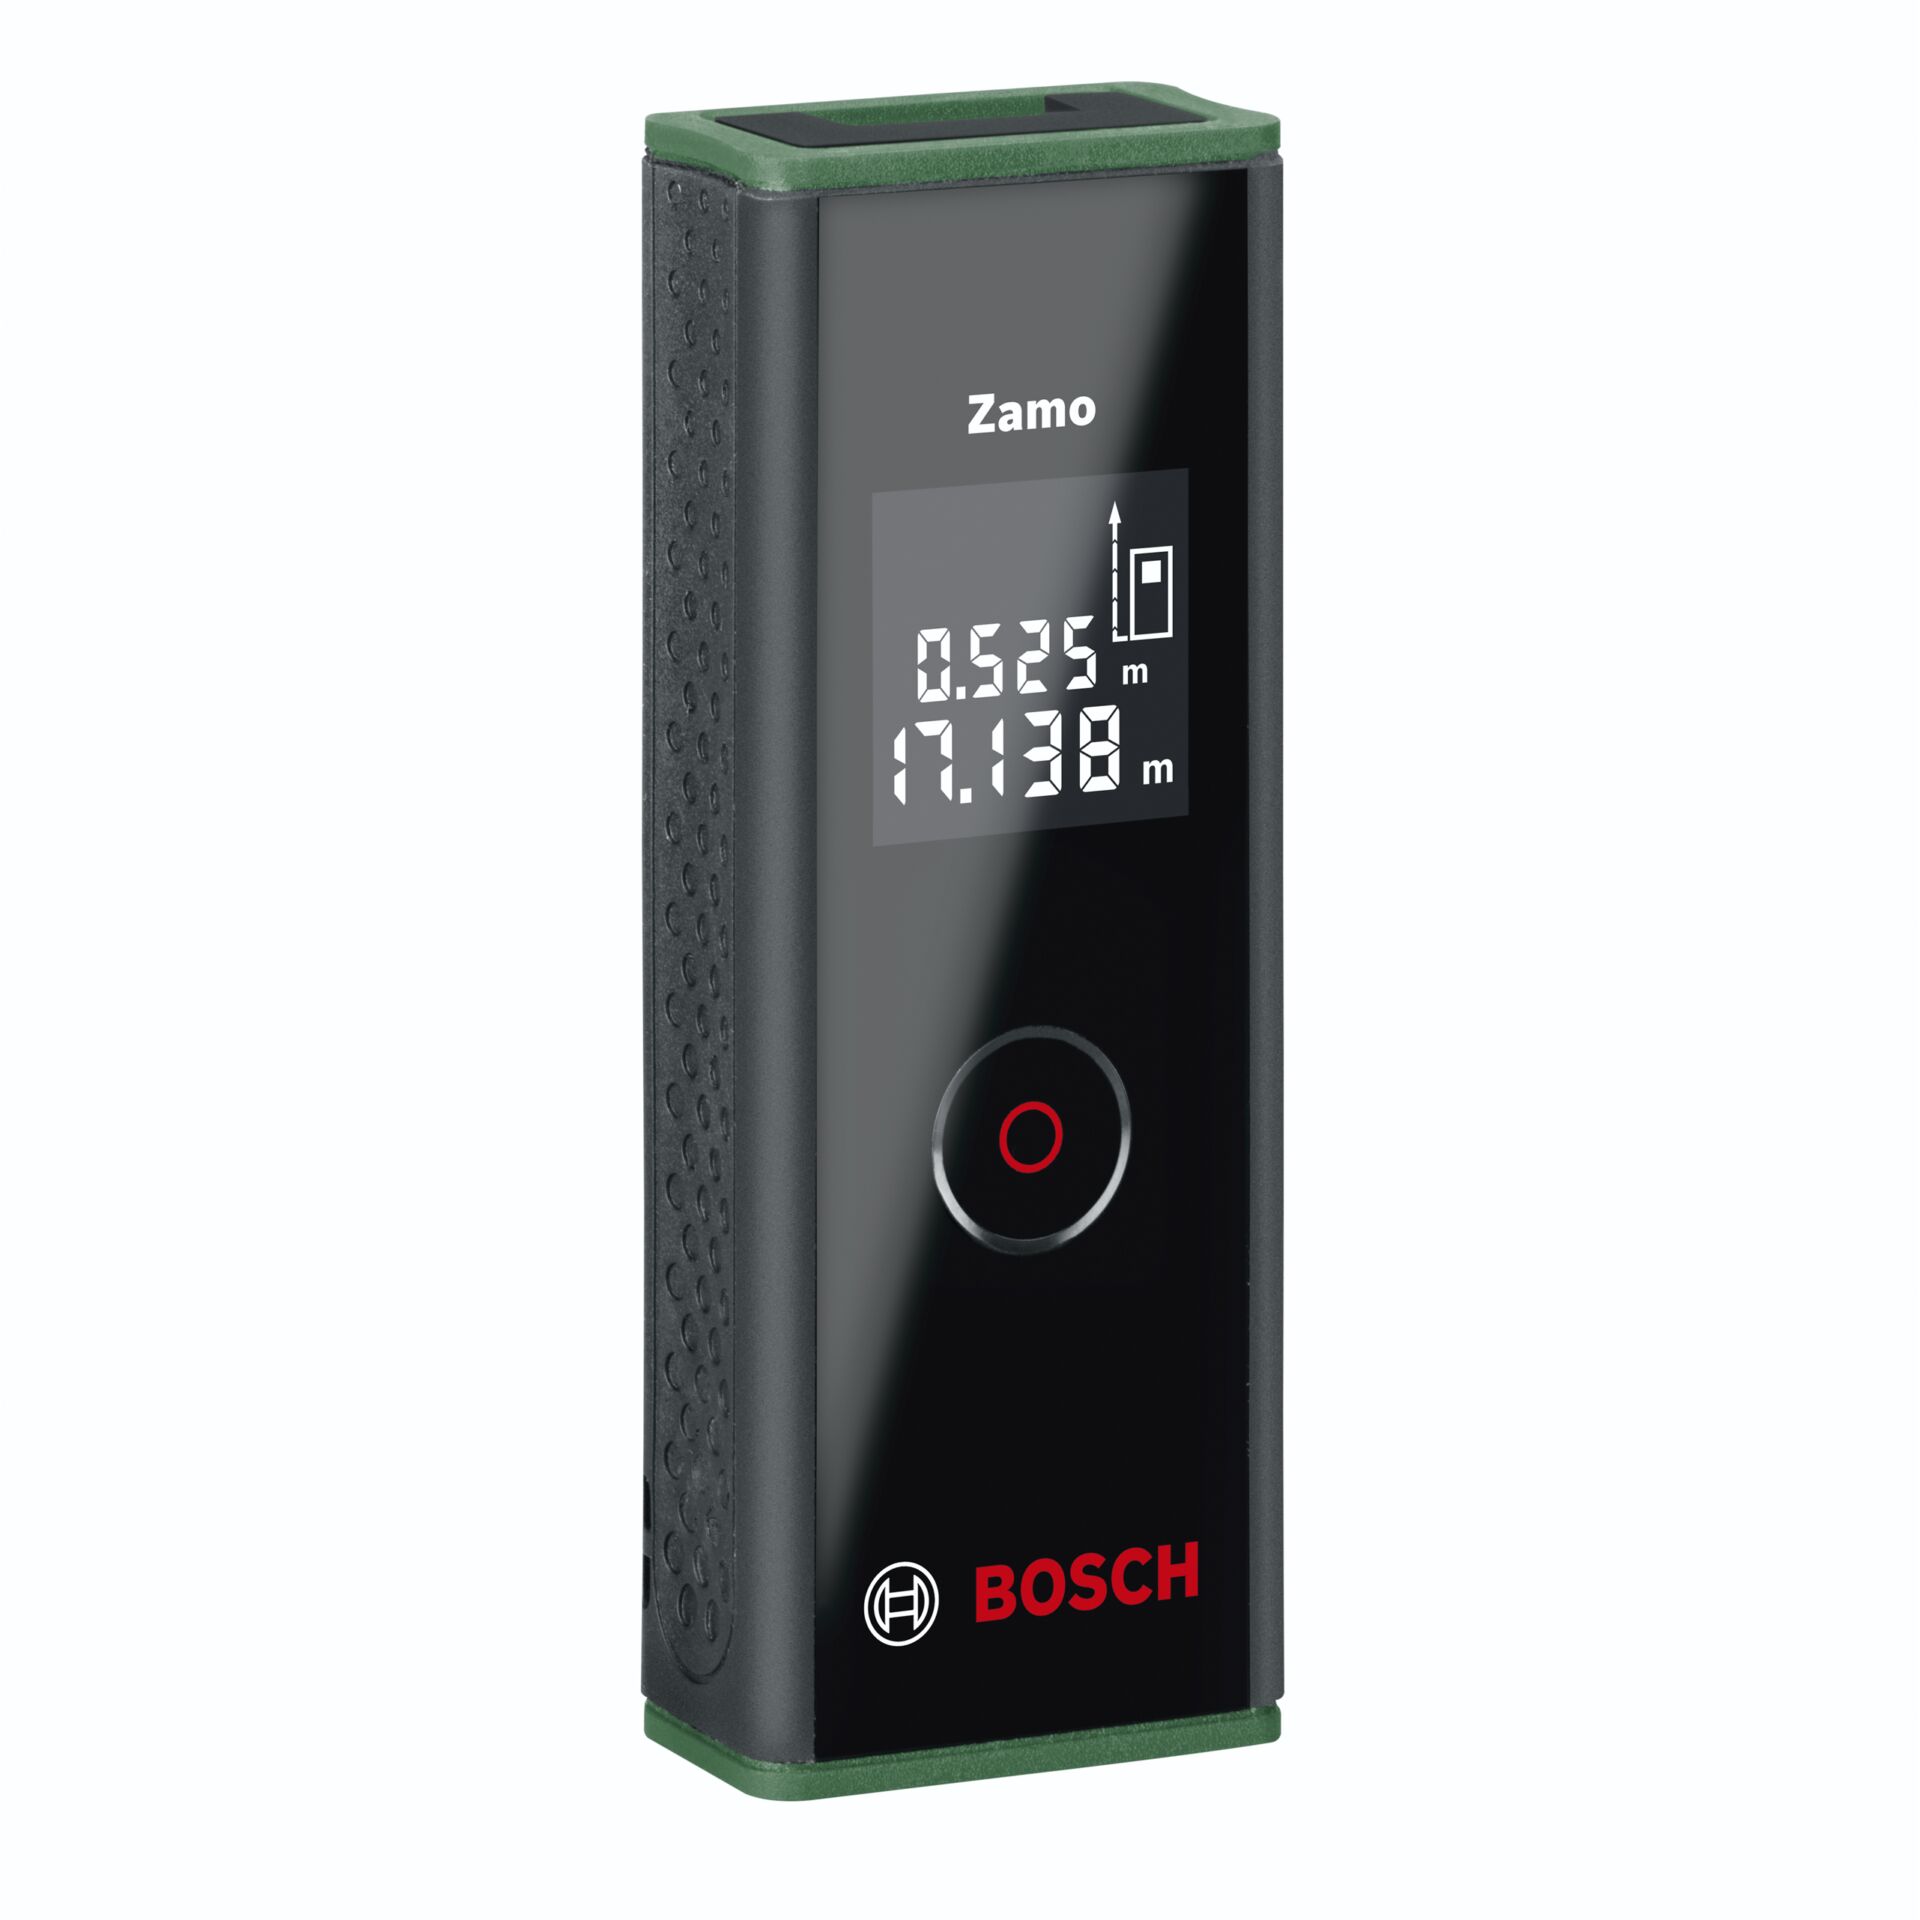 Bosch Zamo III basic